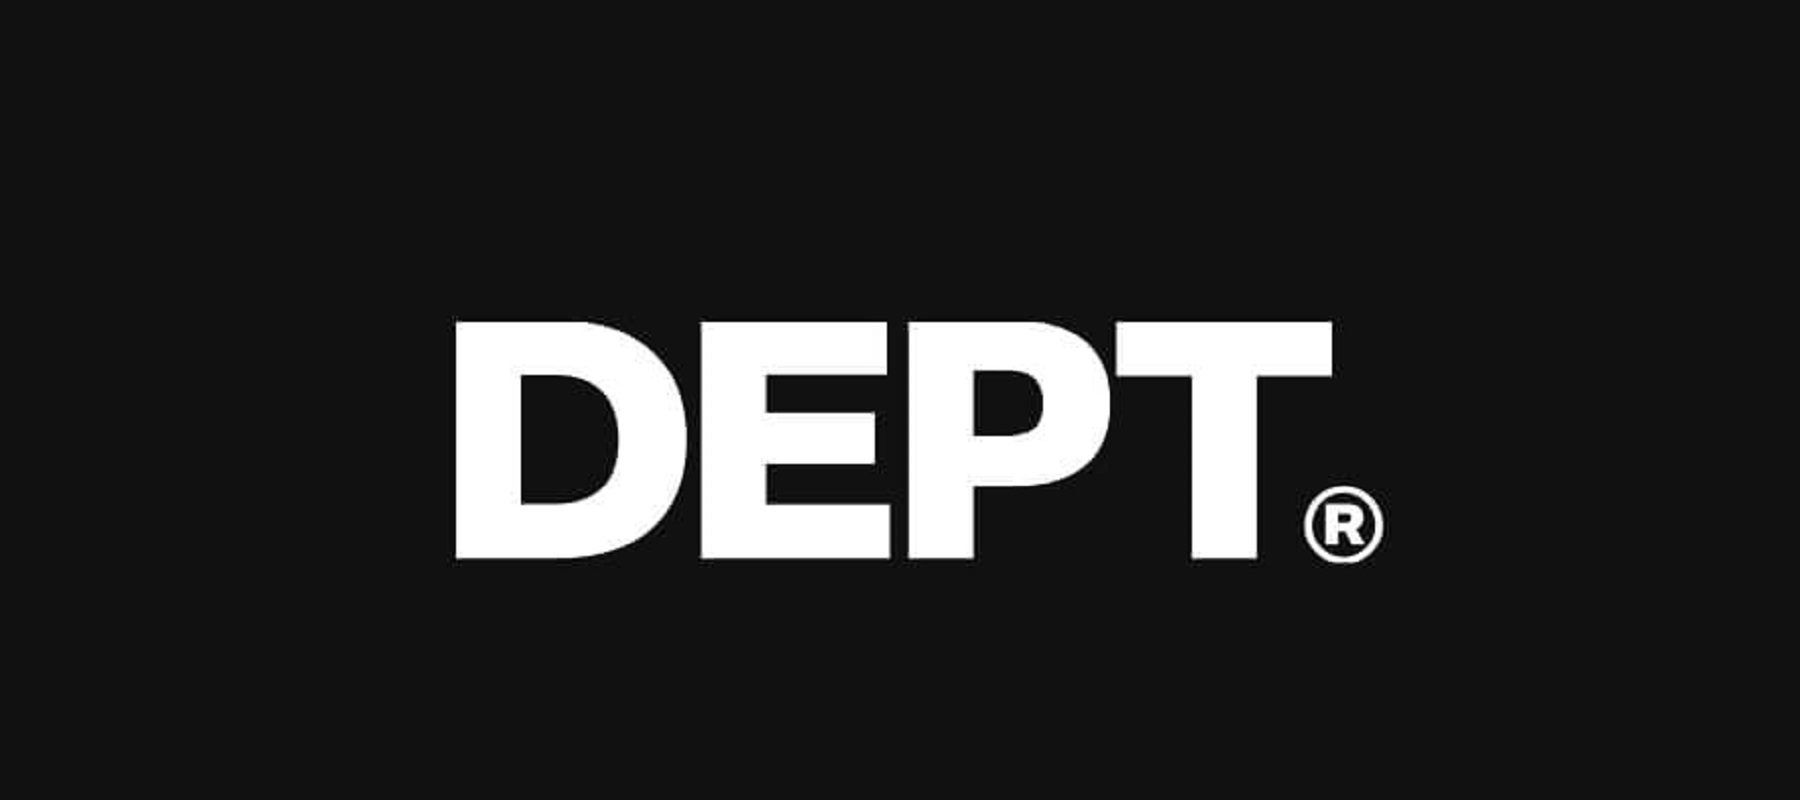 DEPT launches commercetools implementation accelerator